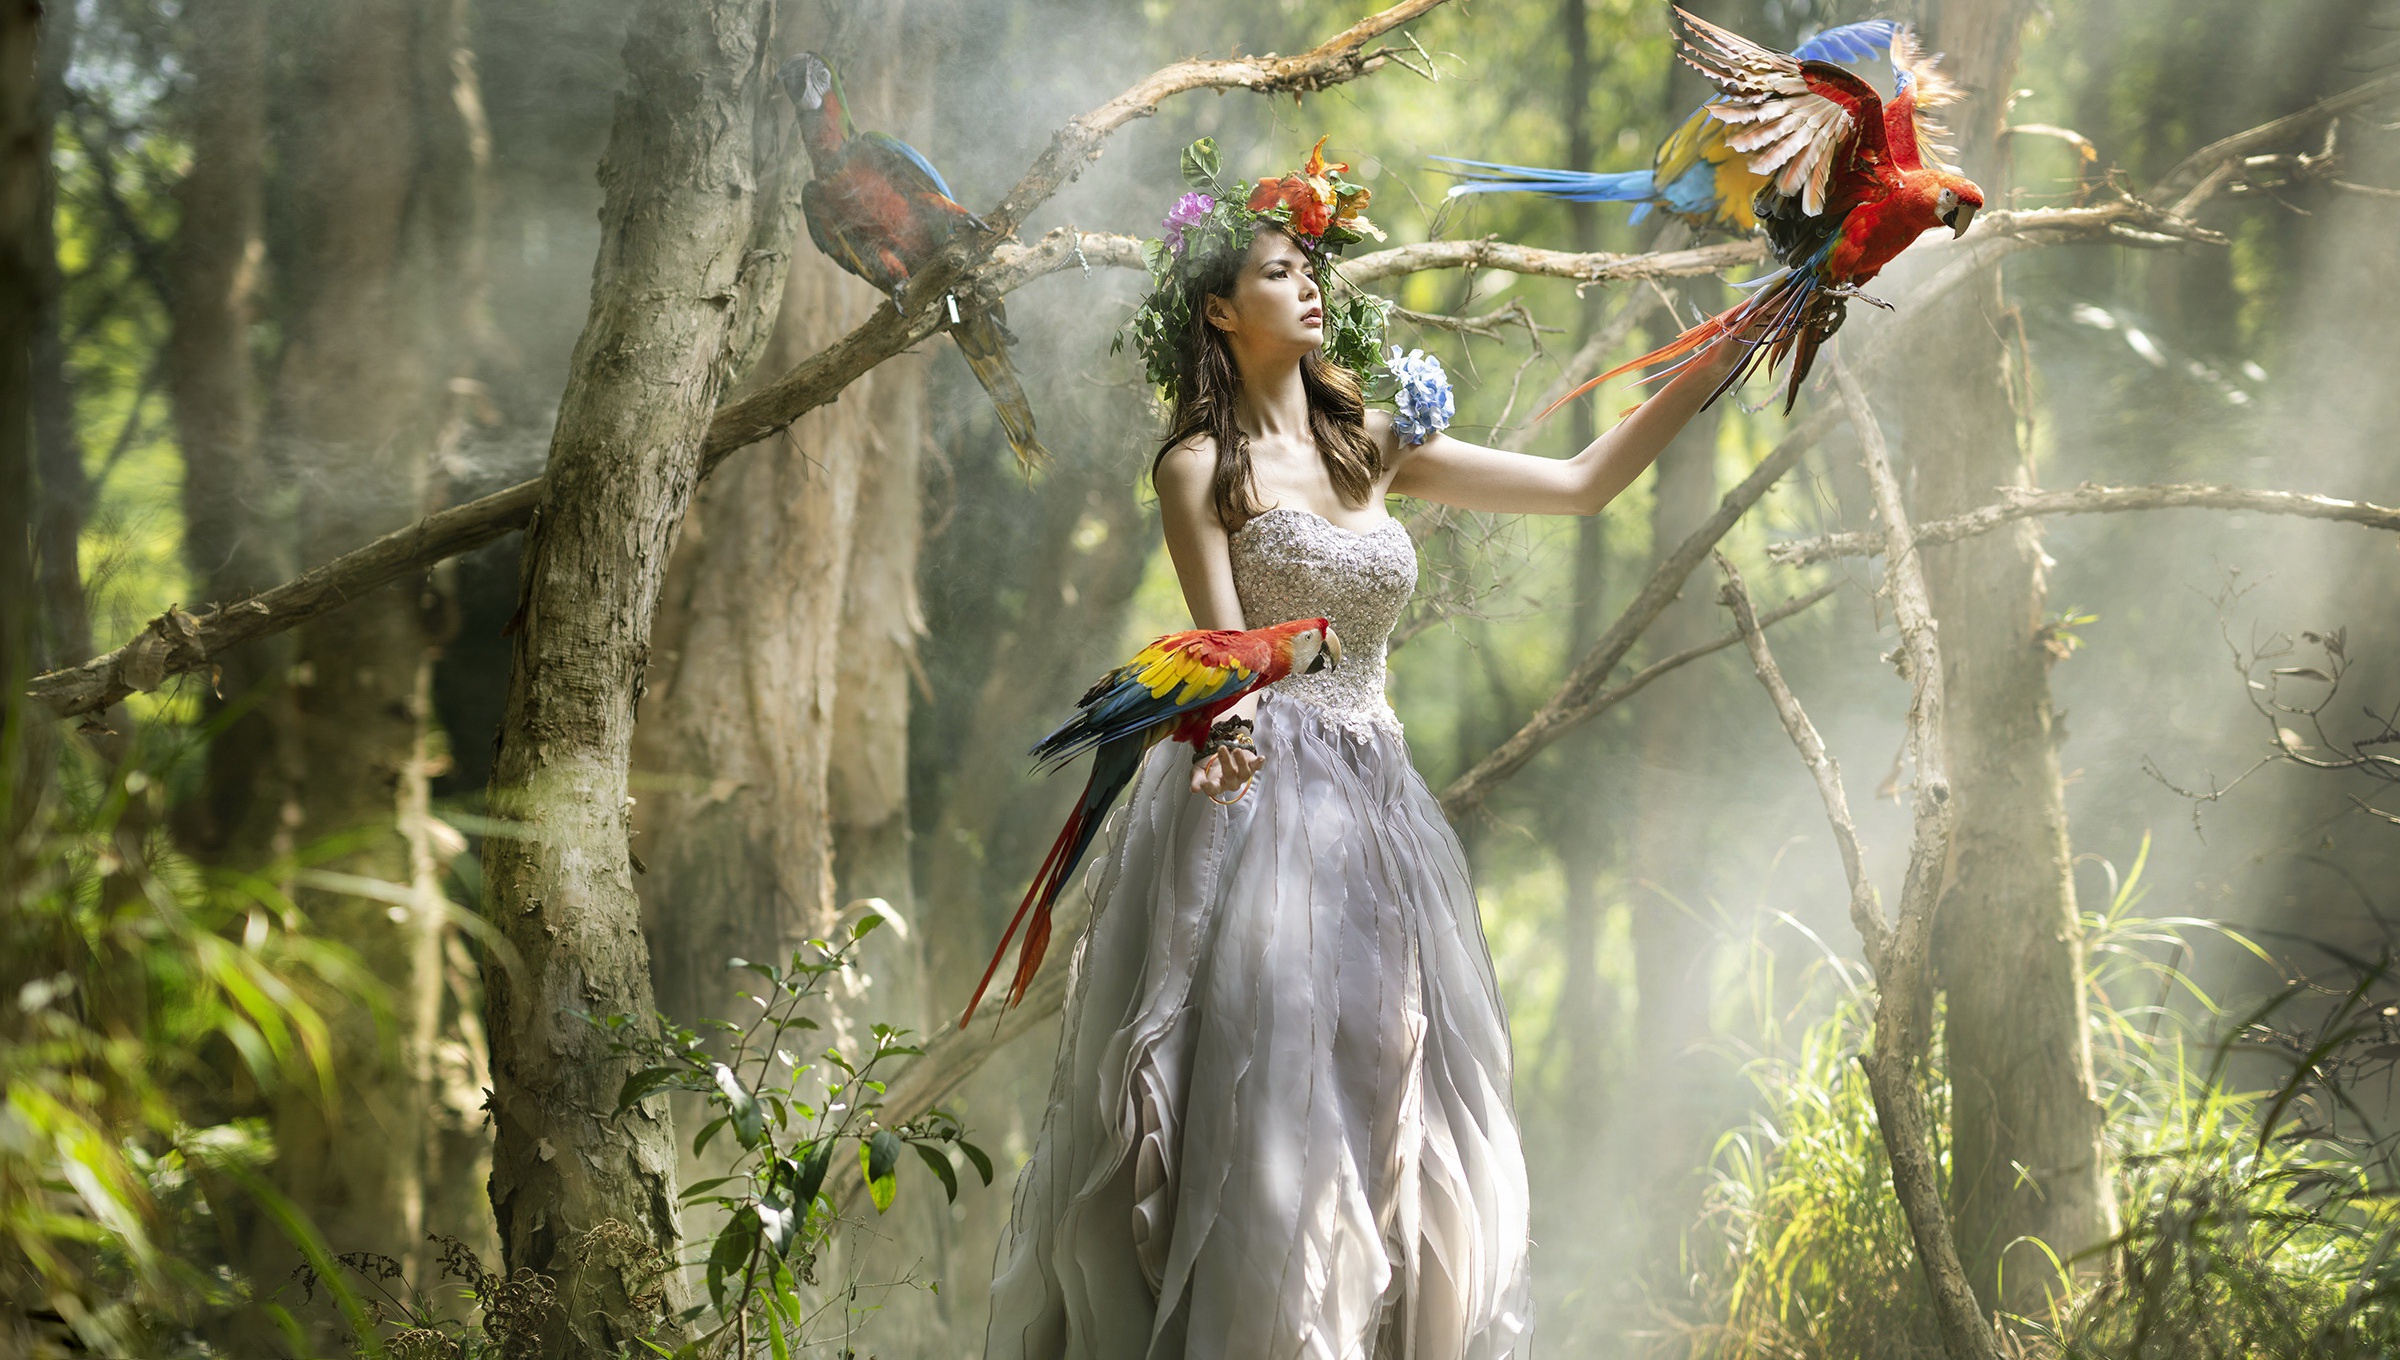 People 2400x1360 Asian women model animals birds parrot fantasy girl trees women outdoors